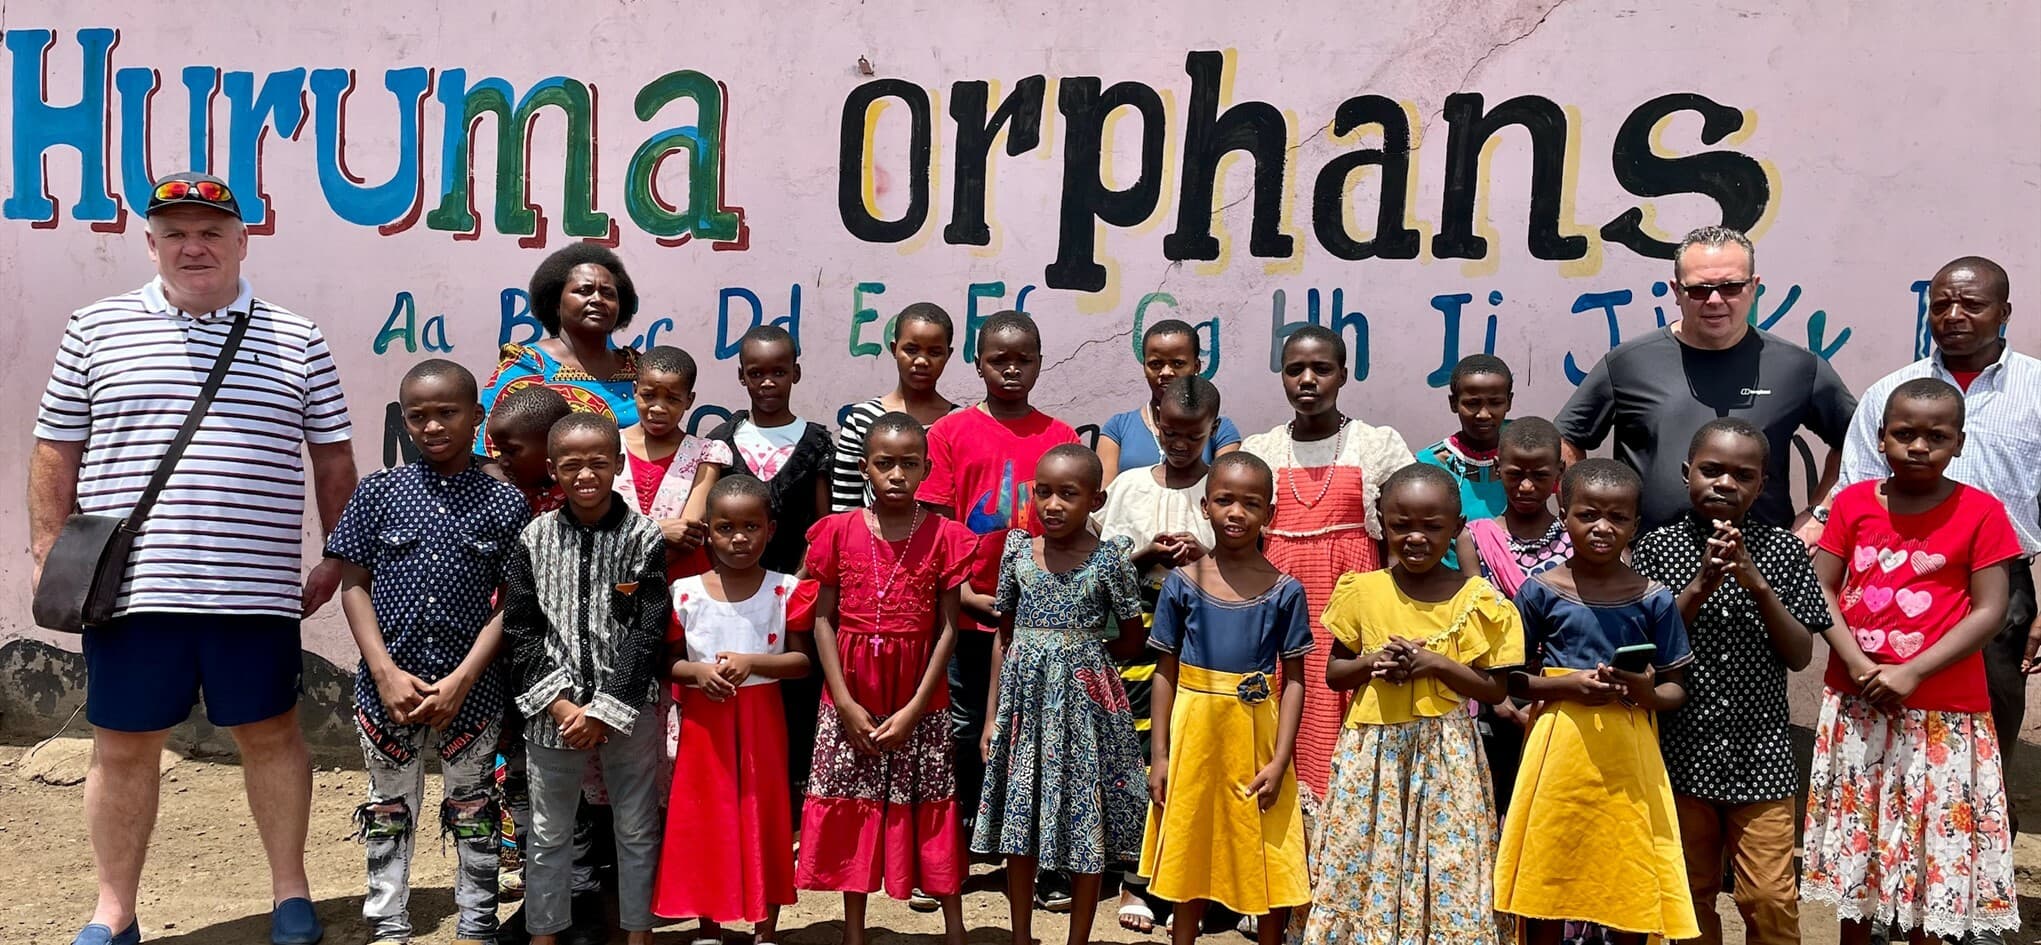 London Cabbies Secure Future of Tanzanian Orphanage